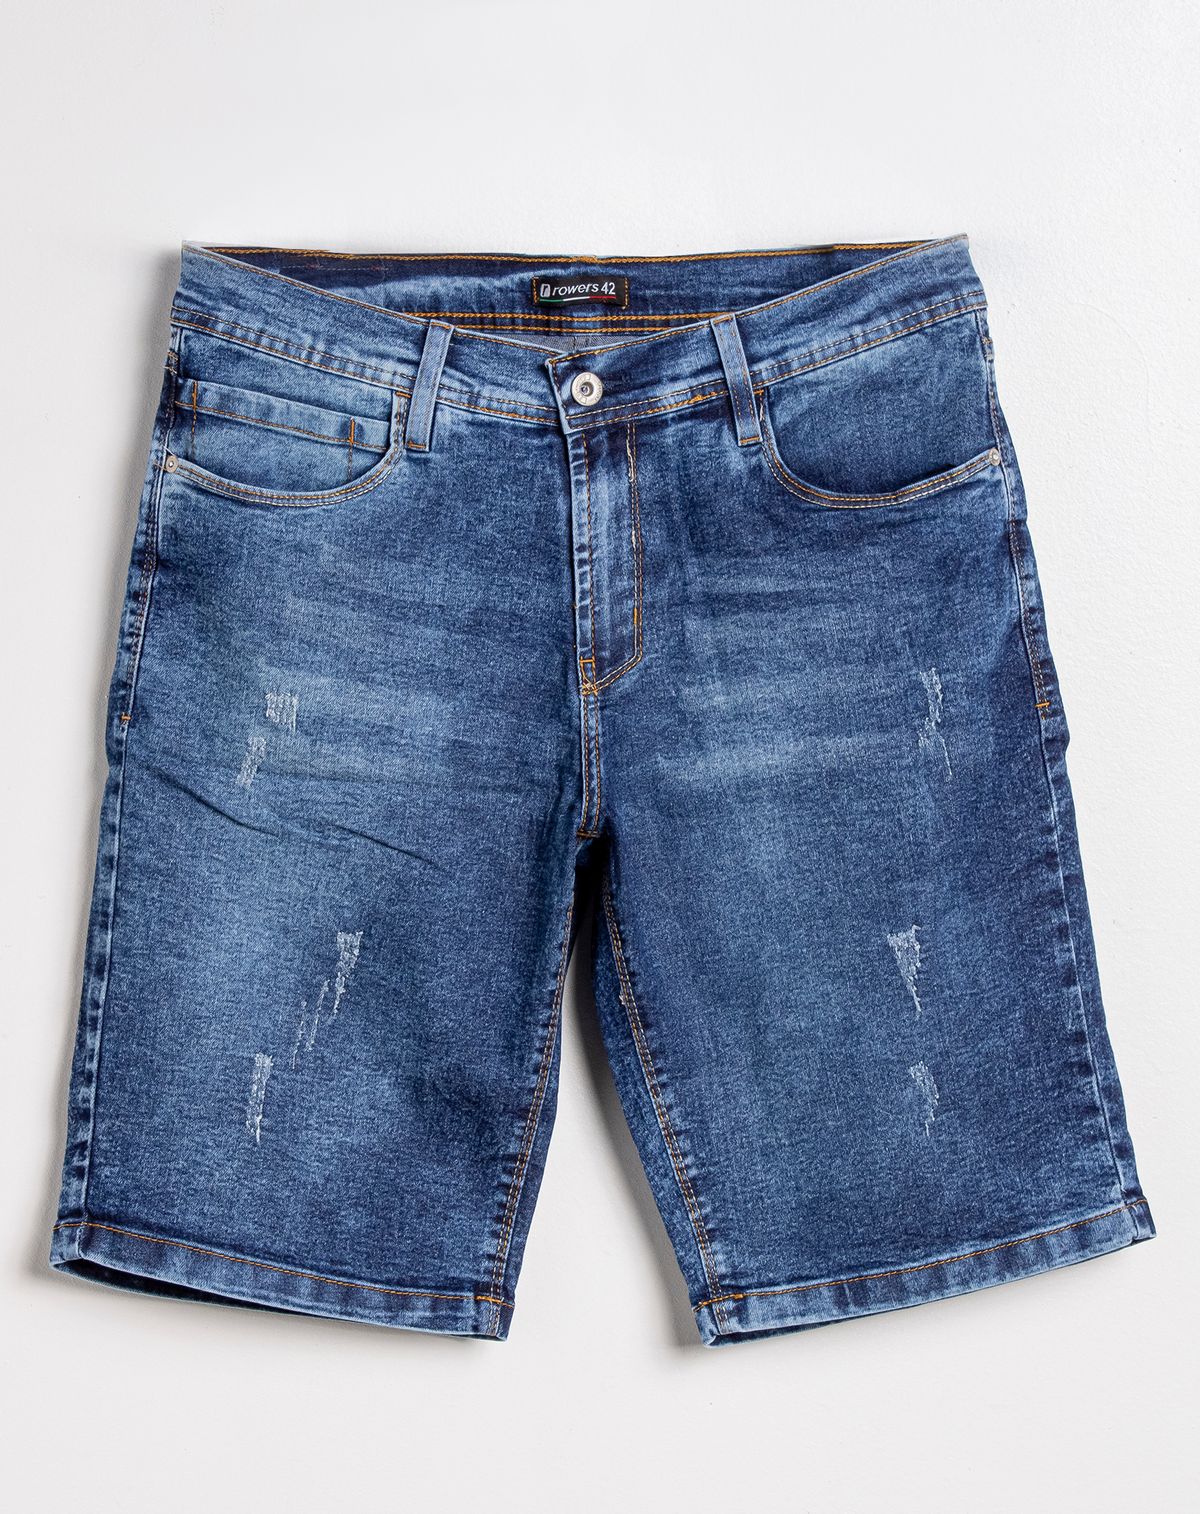 621586003-bermuda-jeans-masculinas-puidos-bolsos-jeans-42-07d